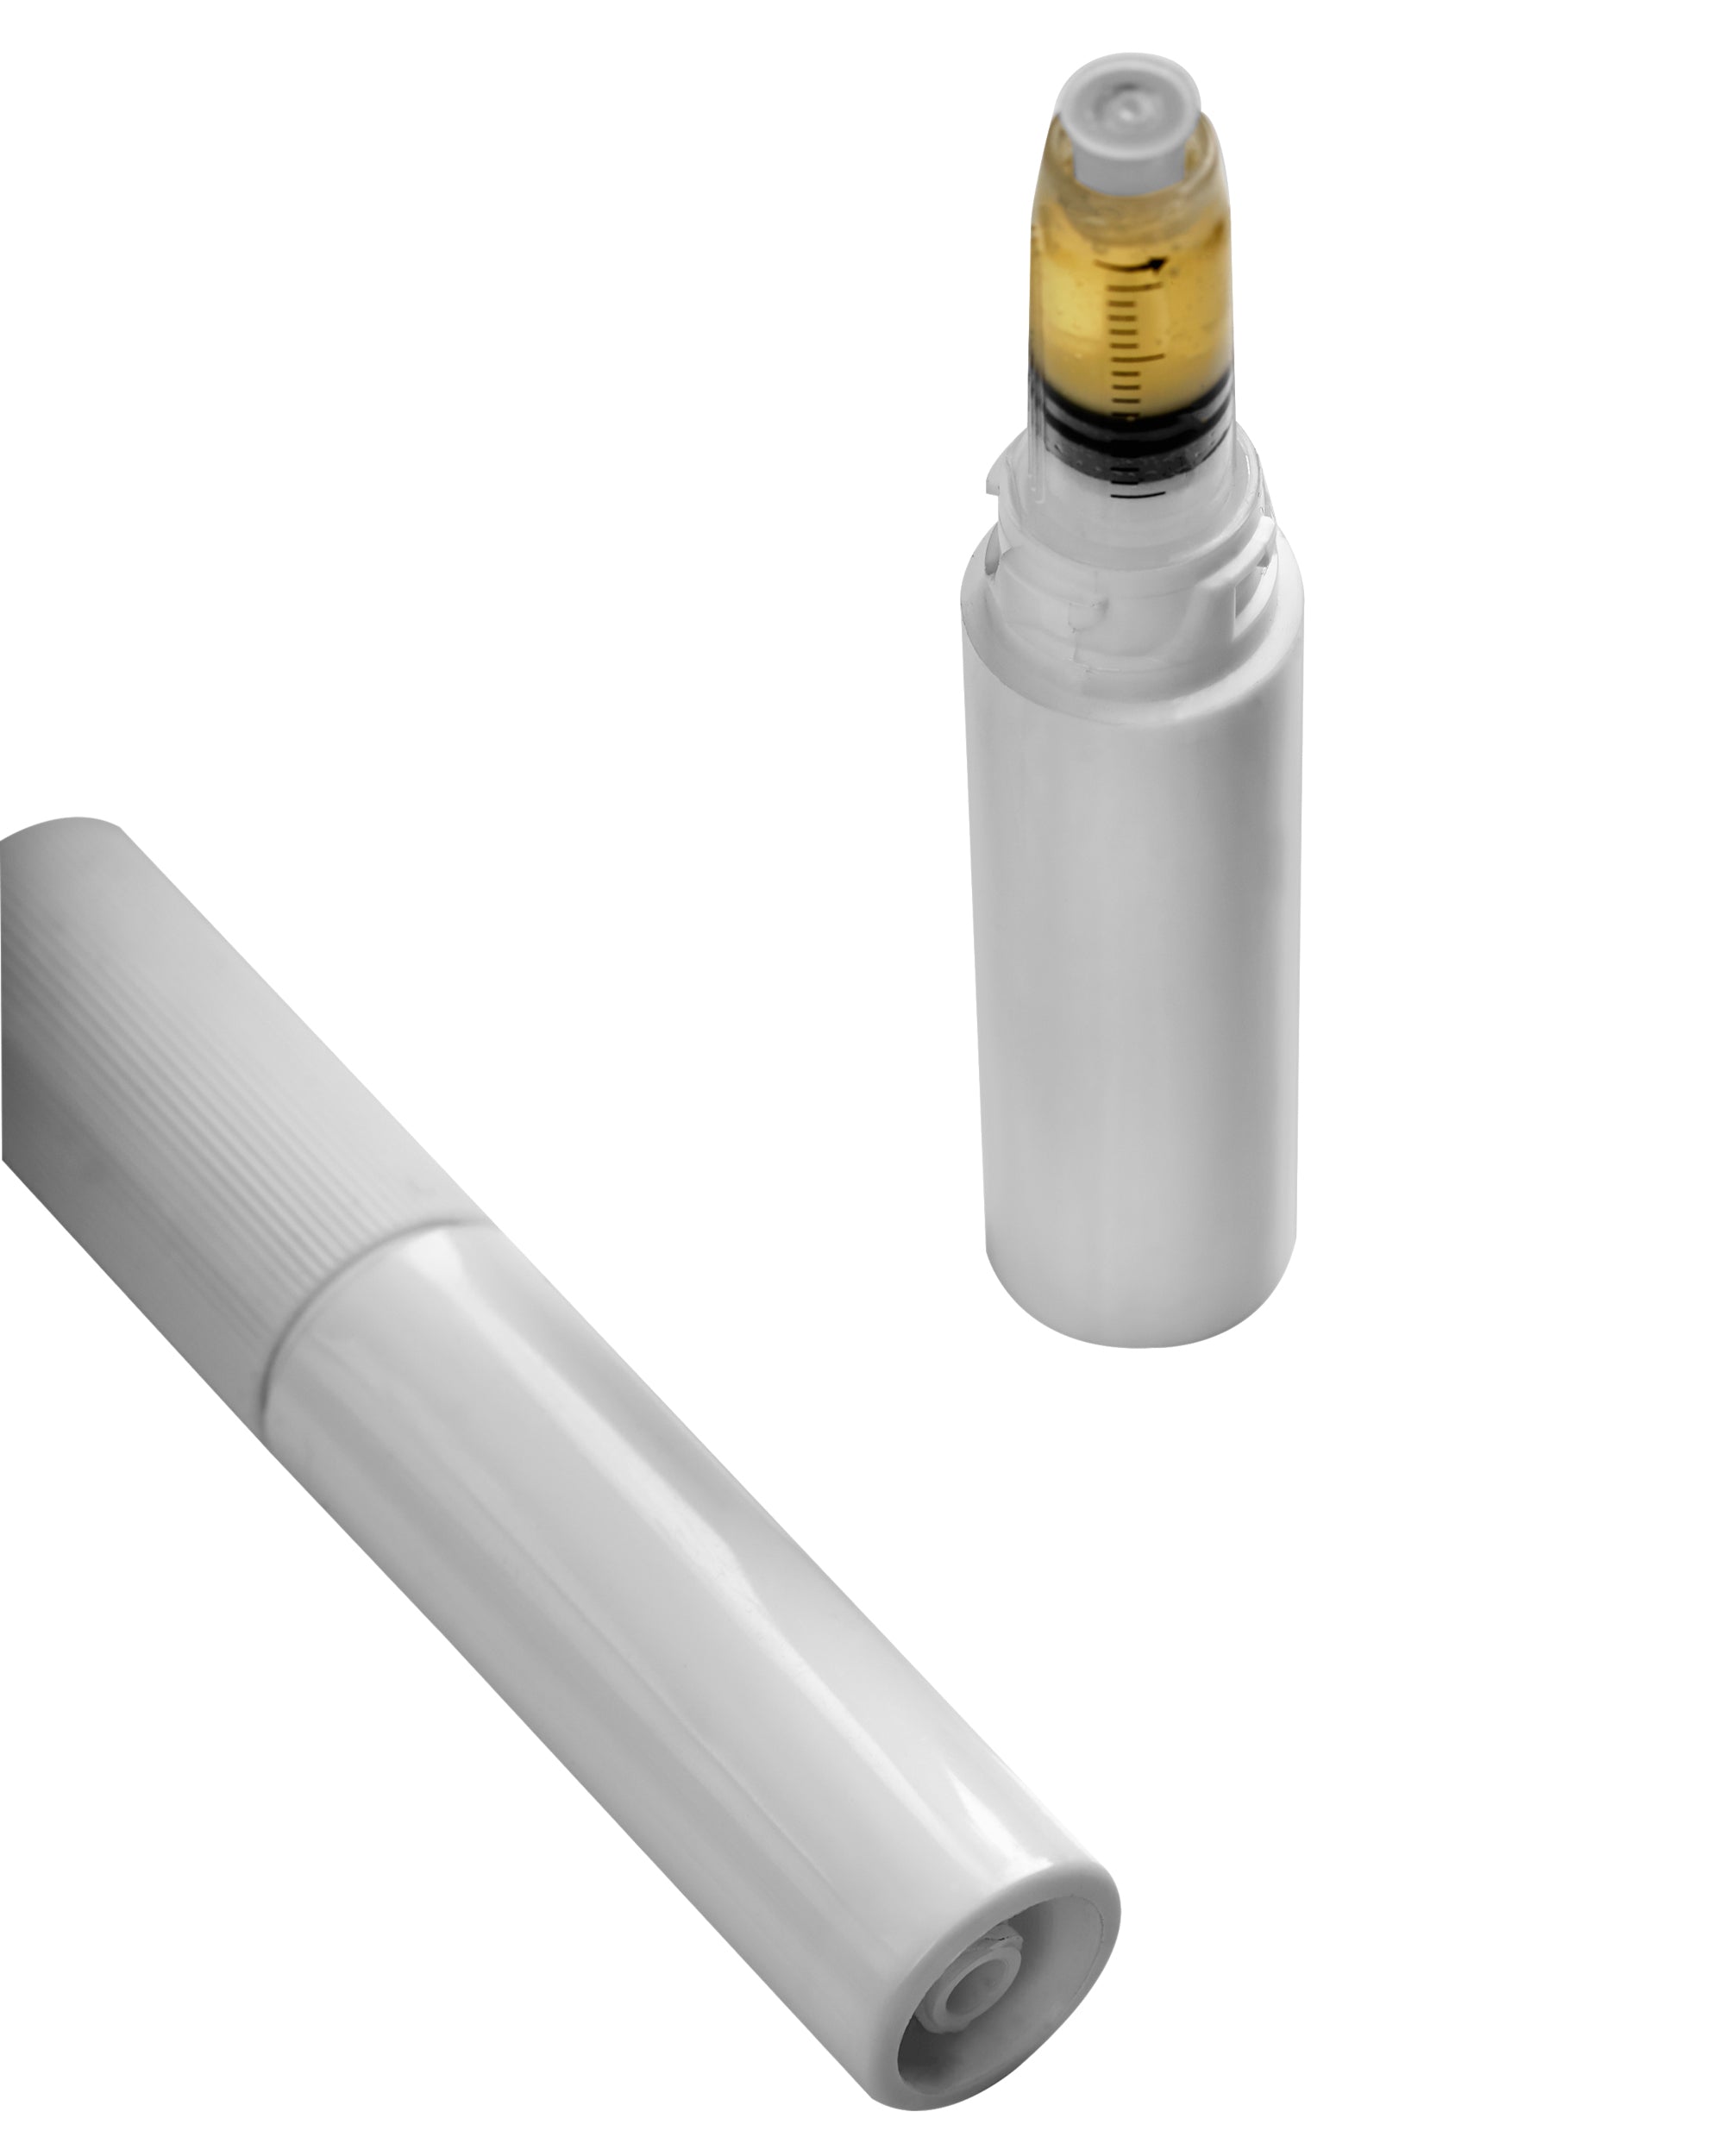 Child Resistant & Luer Lock | DymaPak Twistspenser White Plastic Dab Applicator Syringes | 1mL - 0.33mL Increments - 5